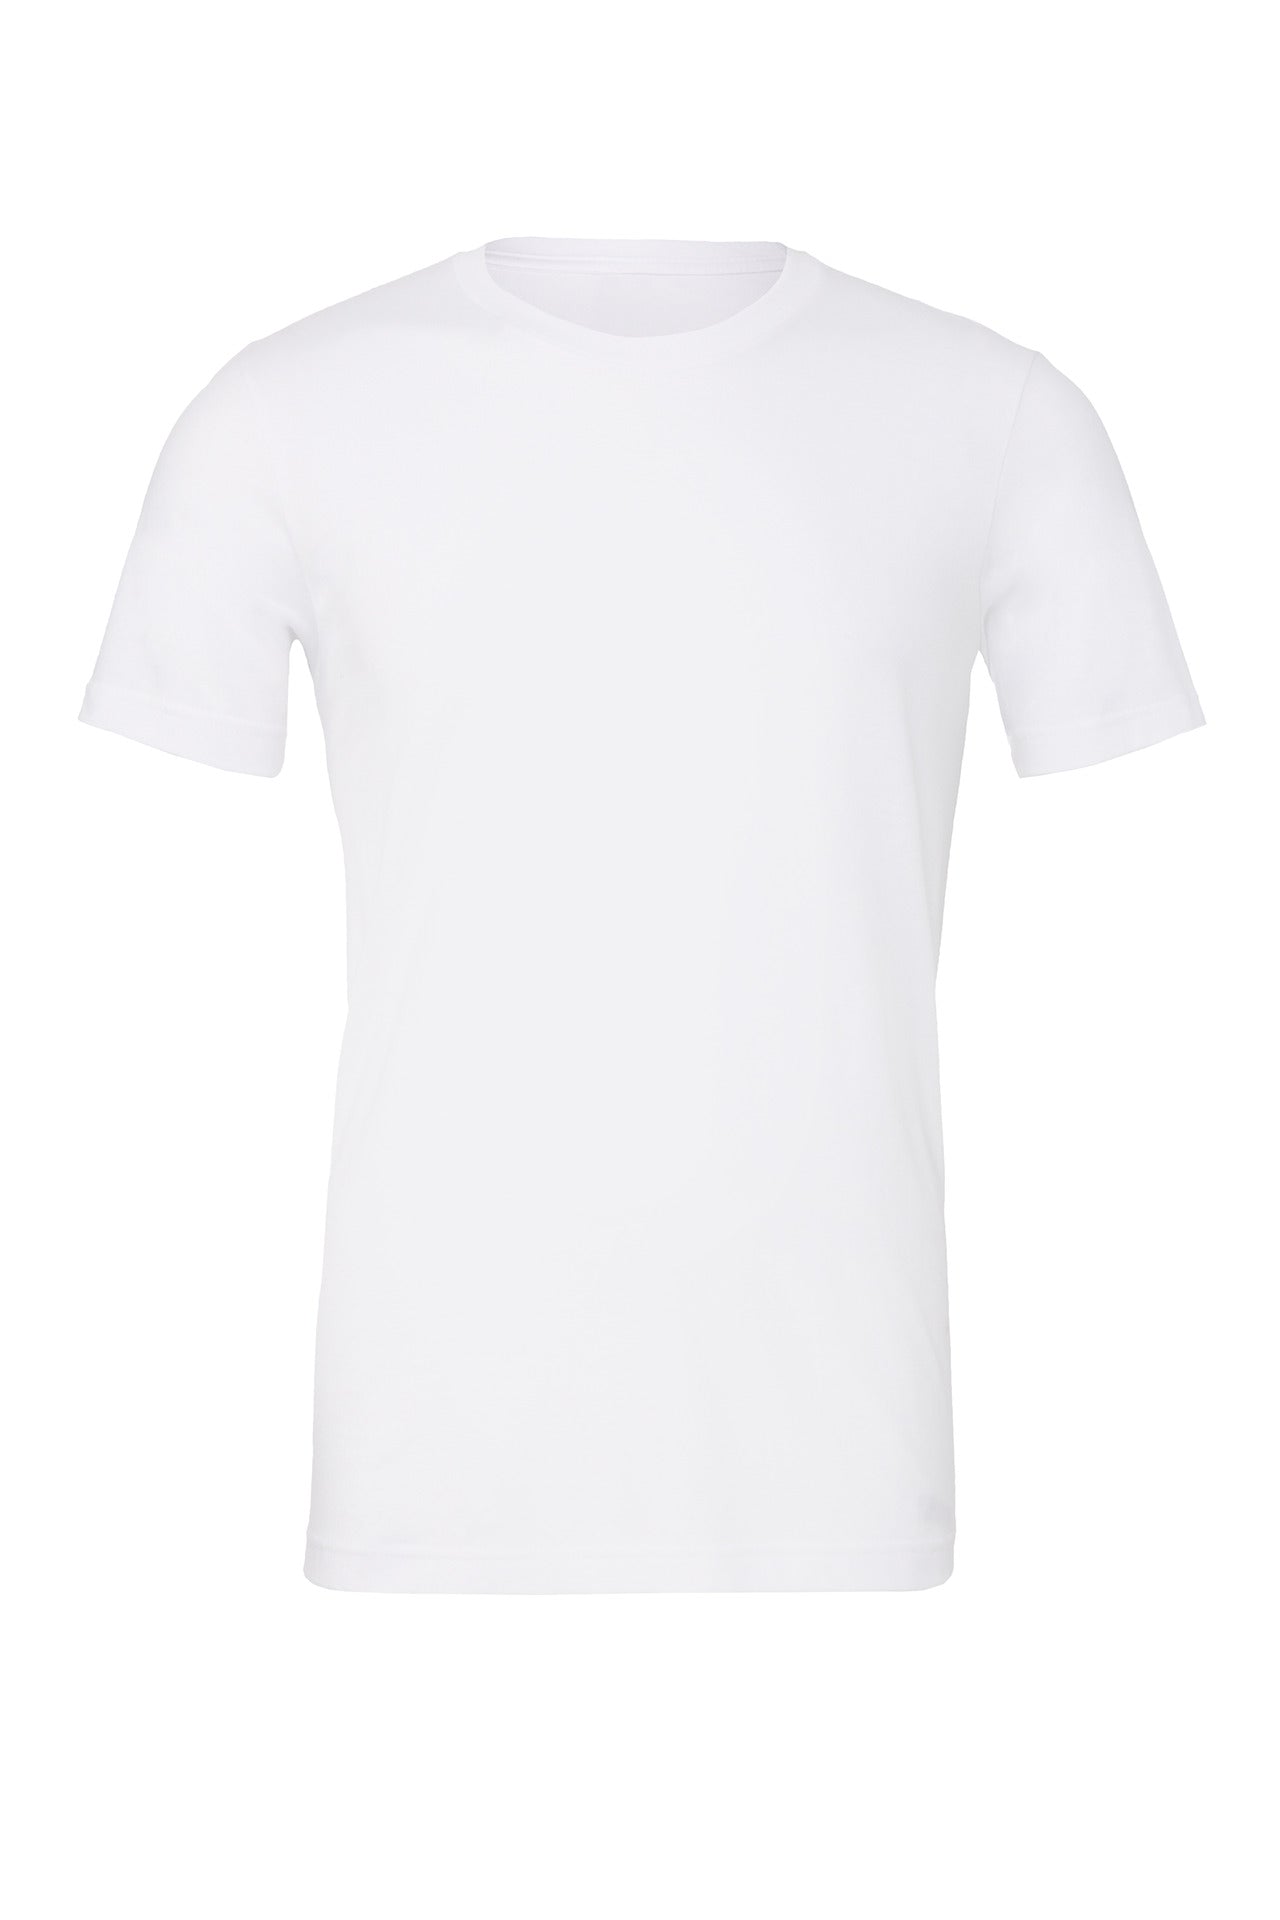 Bella+Canvas® Unisex Jersey S/S T-Shirt